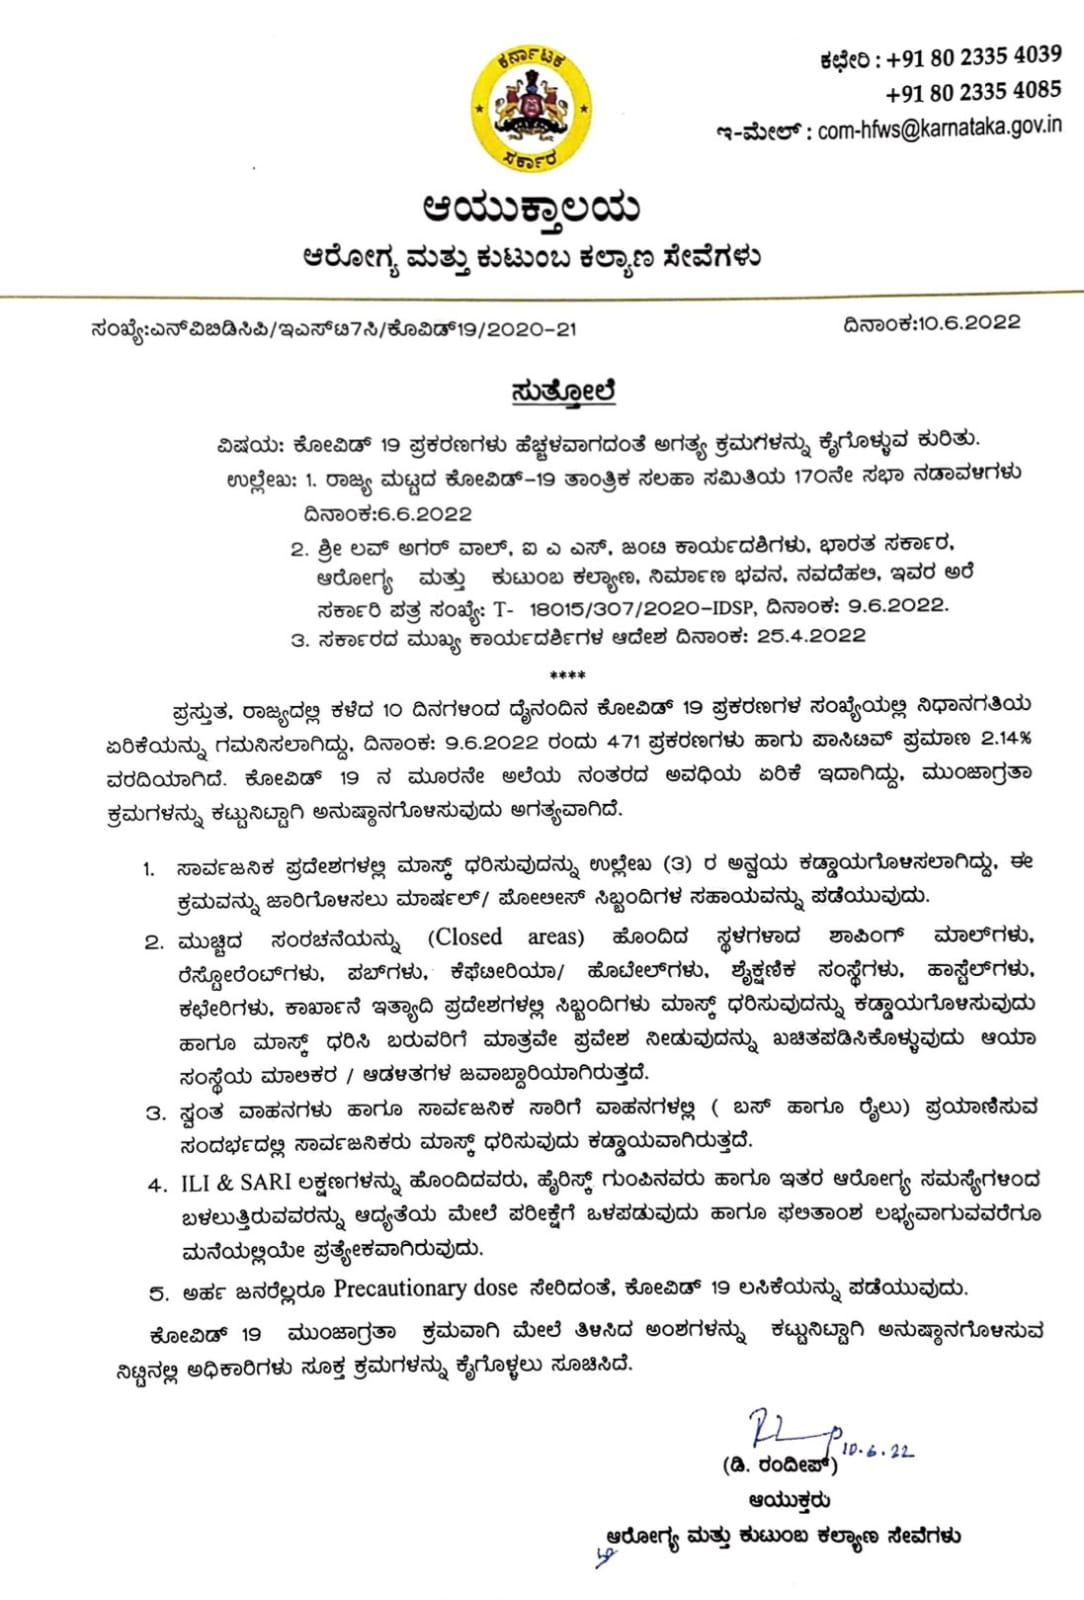 Covid-19: Karnataka mandates Compulsory Wearing of Mask; Health Department Publishes New Guidelines